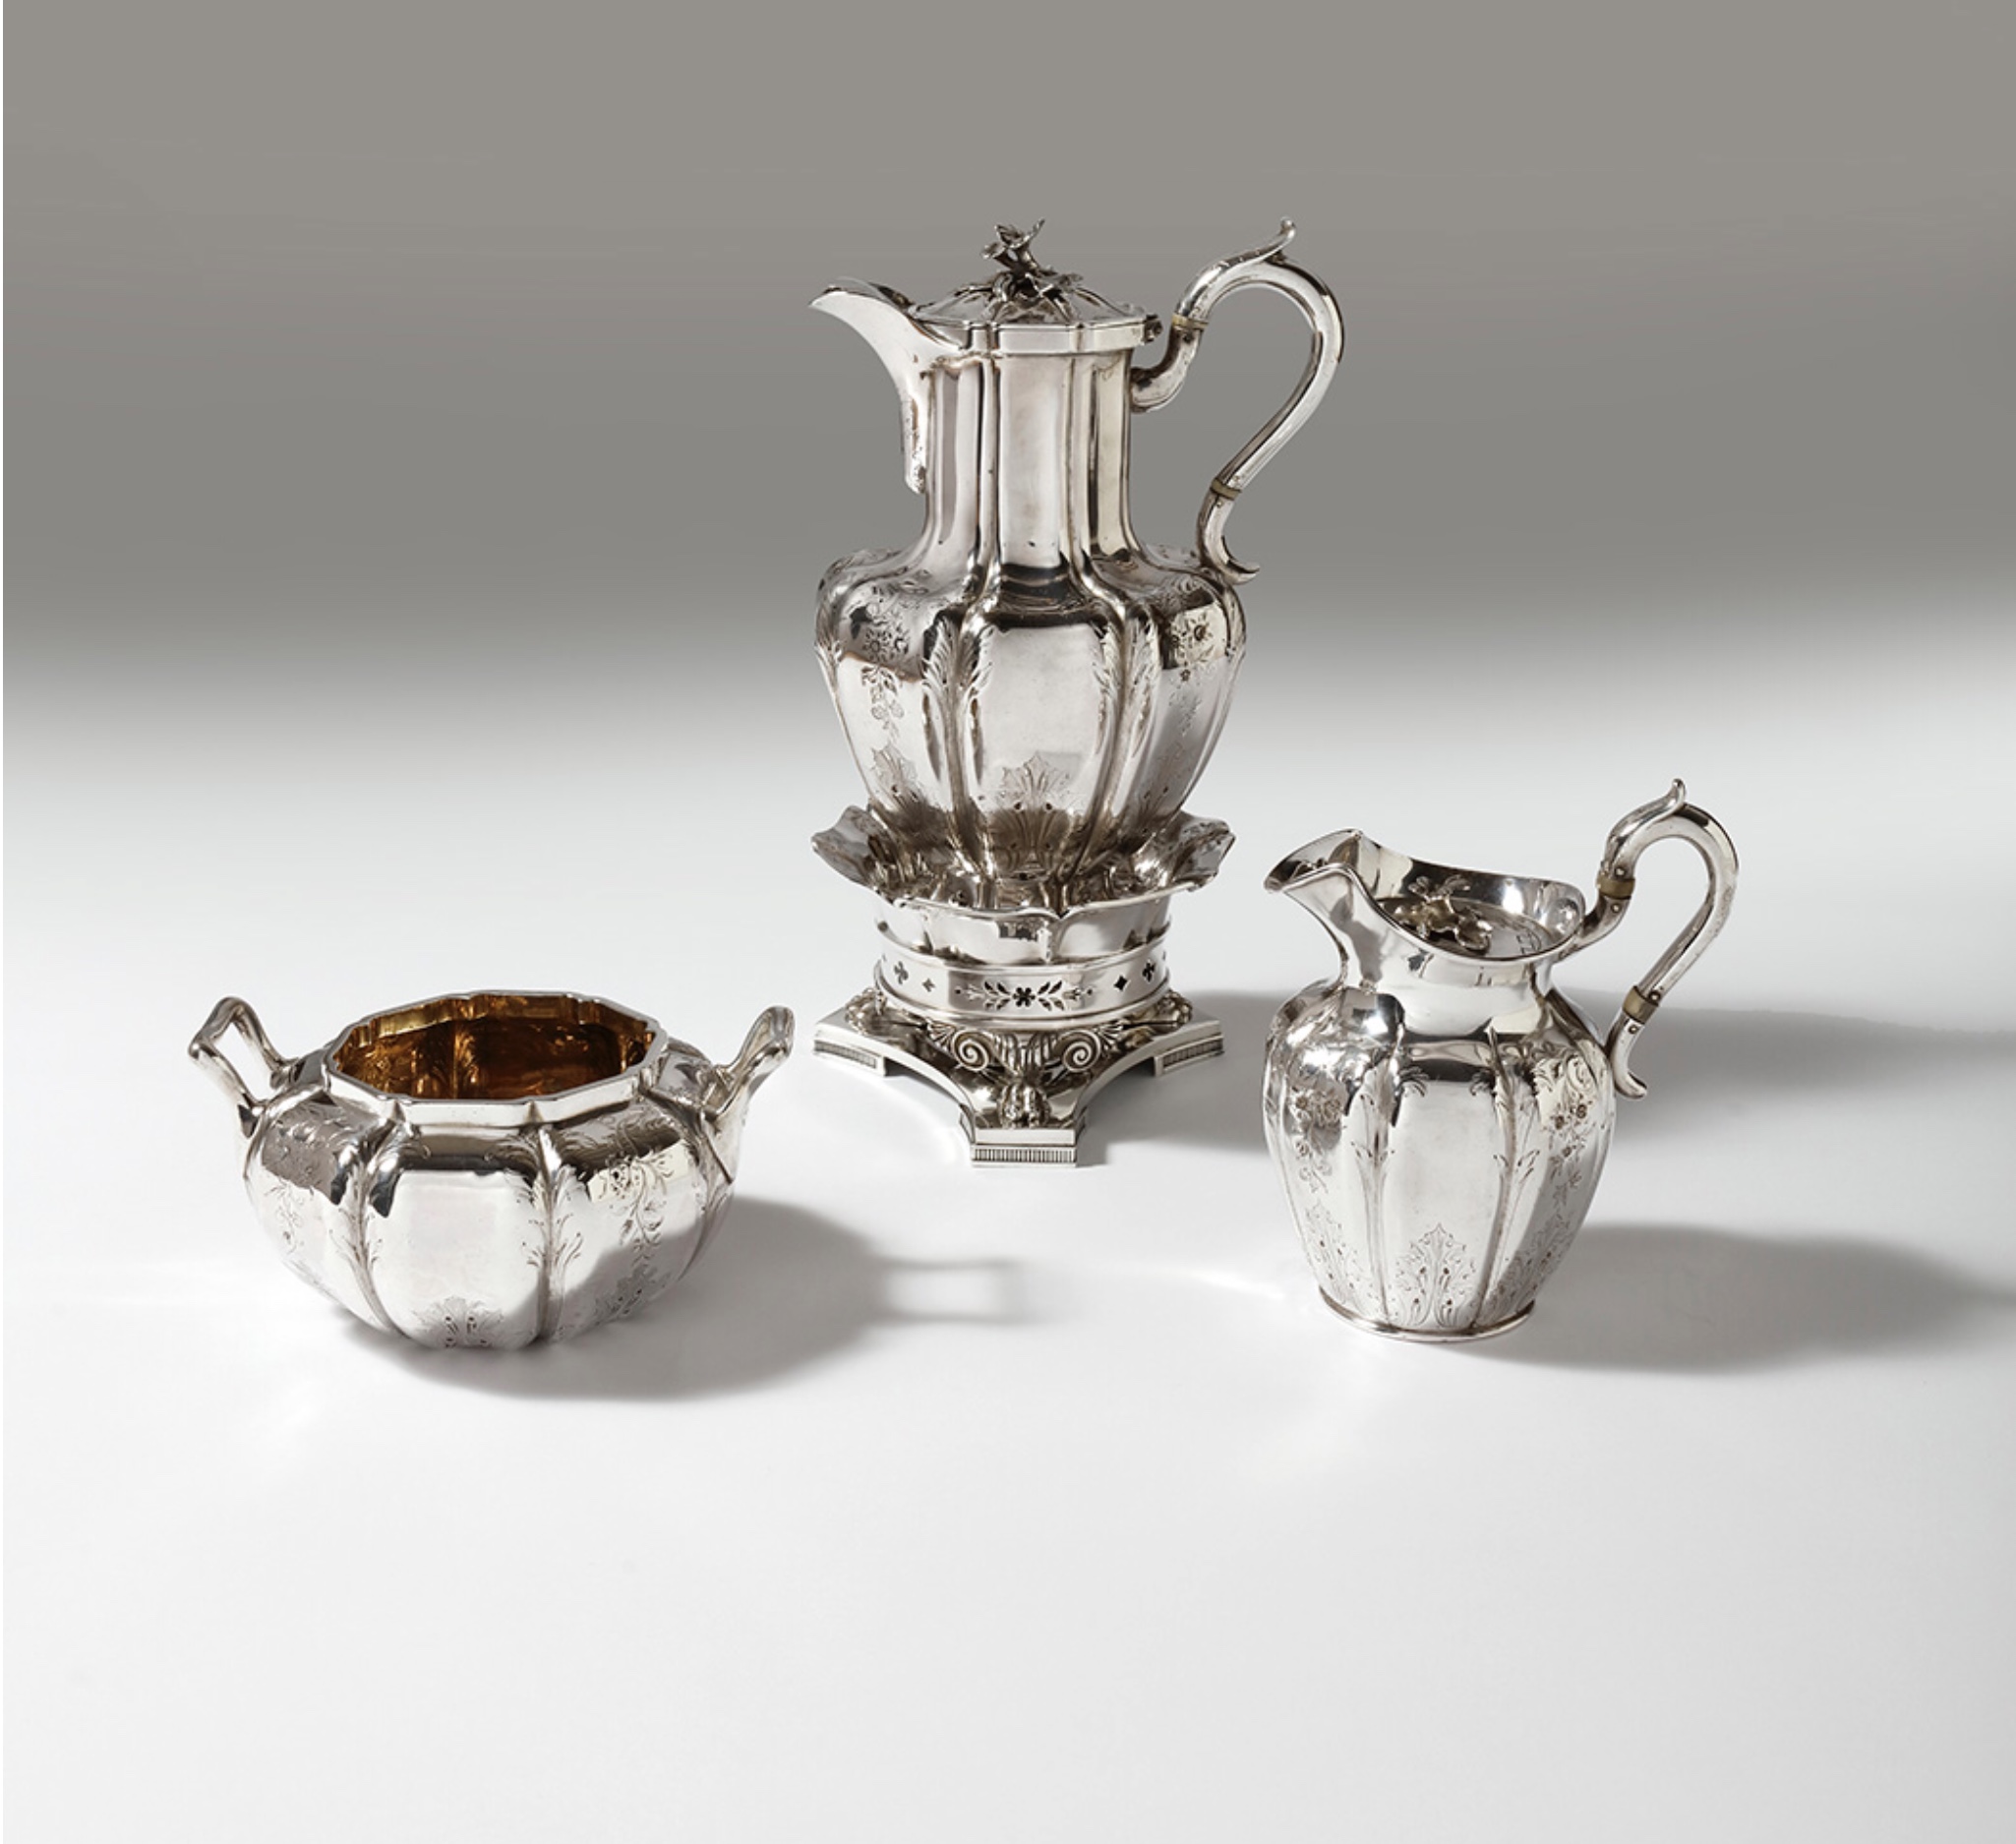 Queen Victoria's silver coffee service, by William Bateman & Daniel Ball